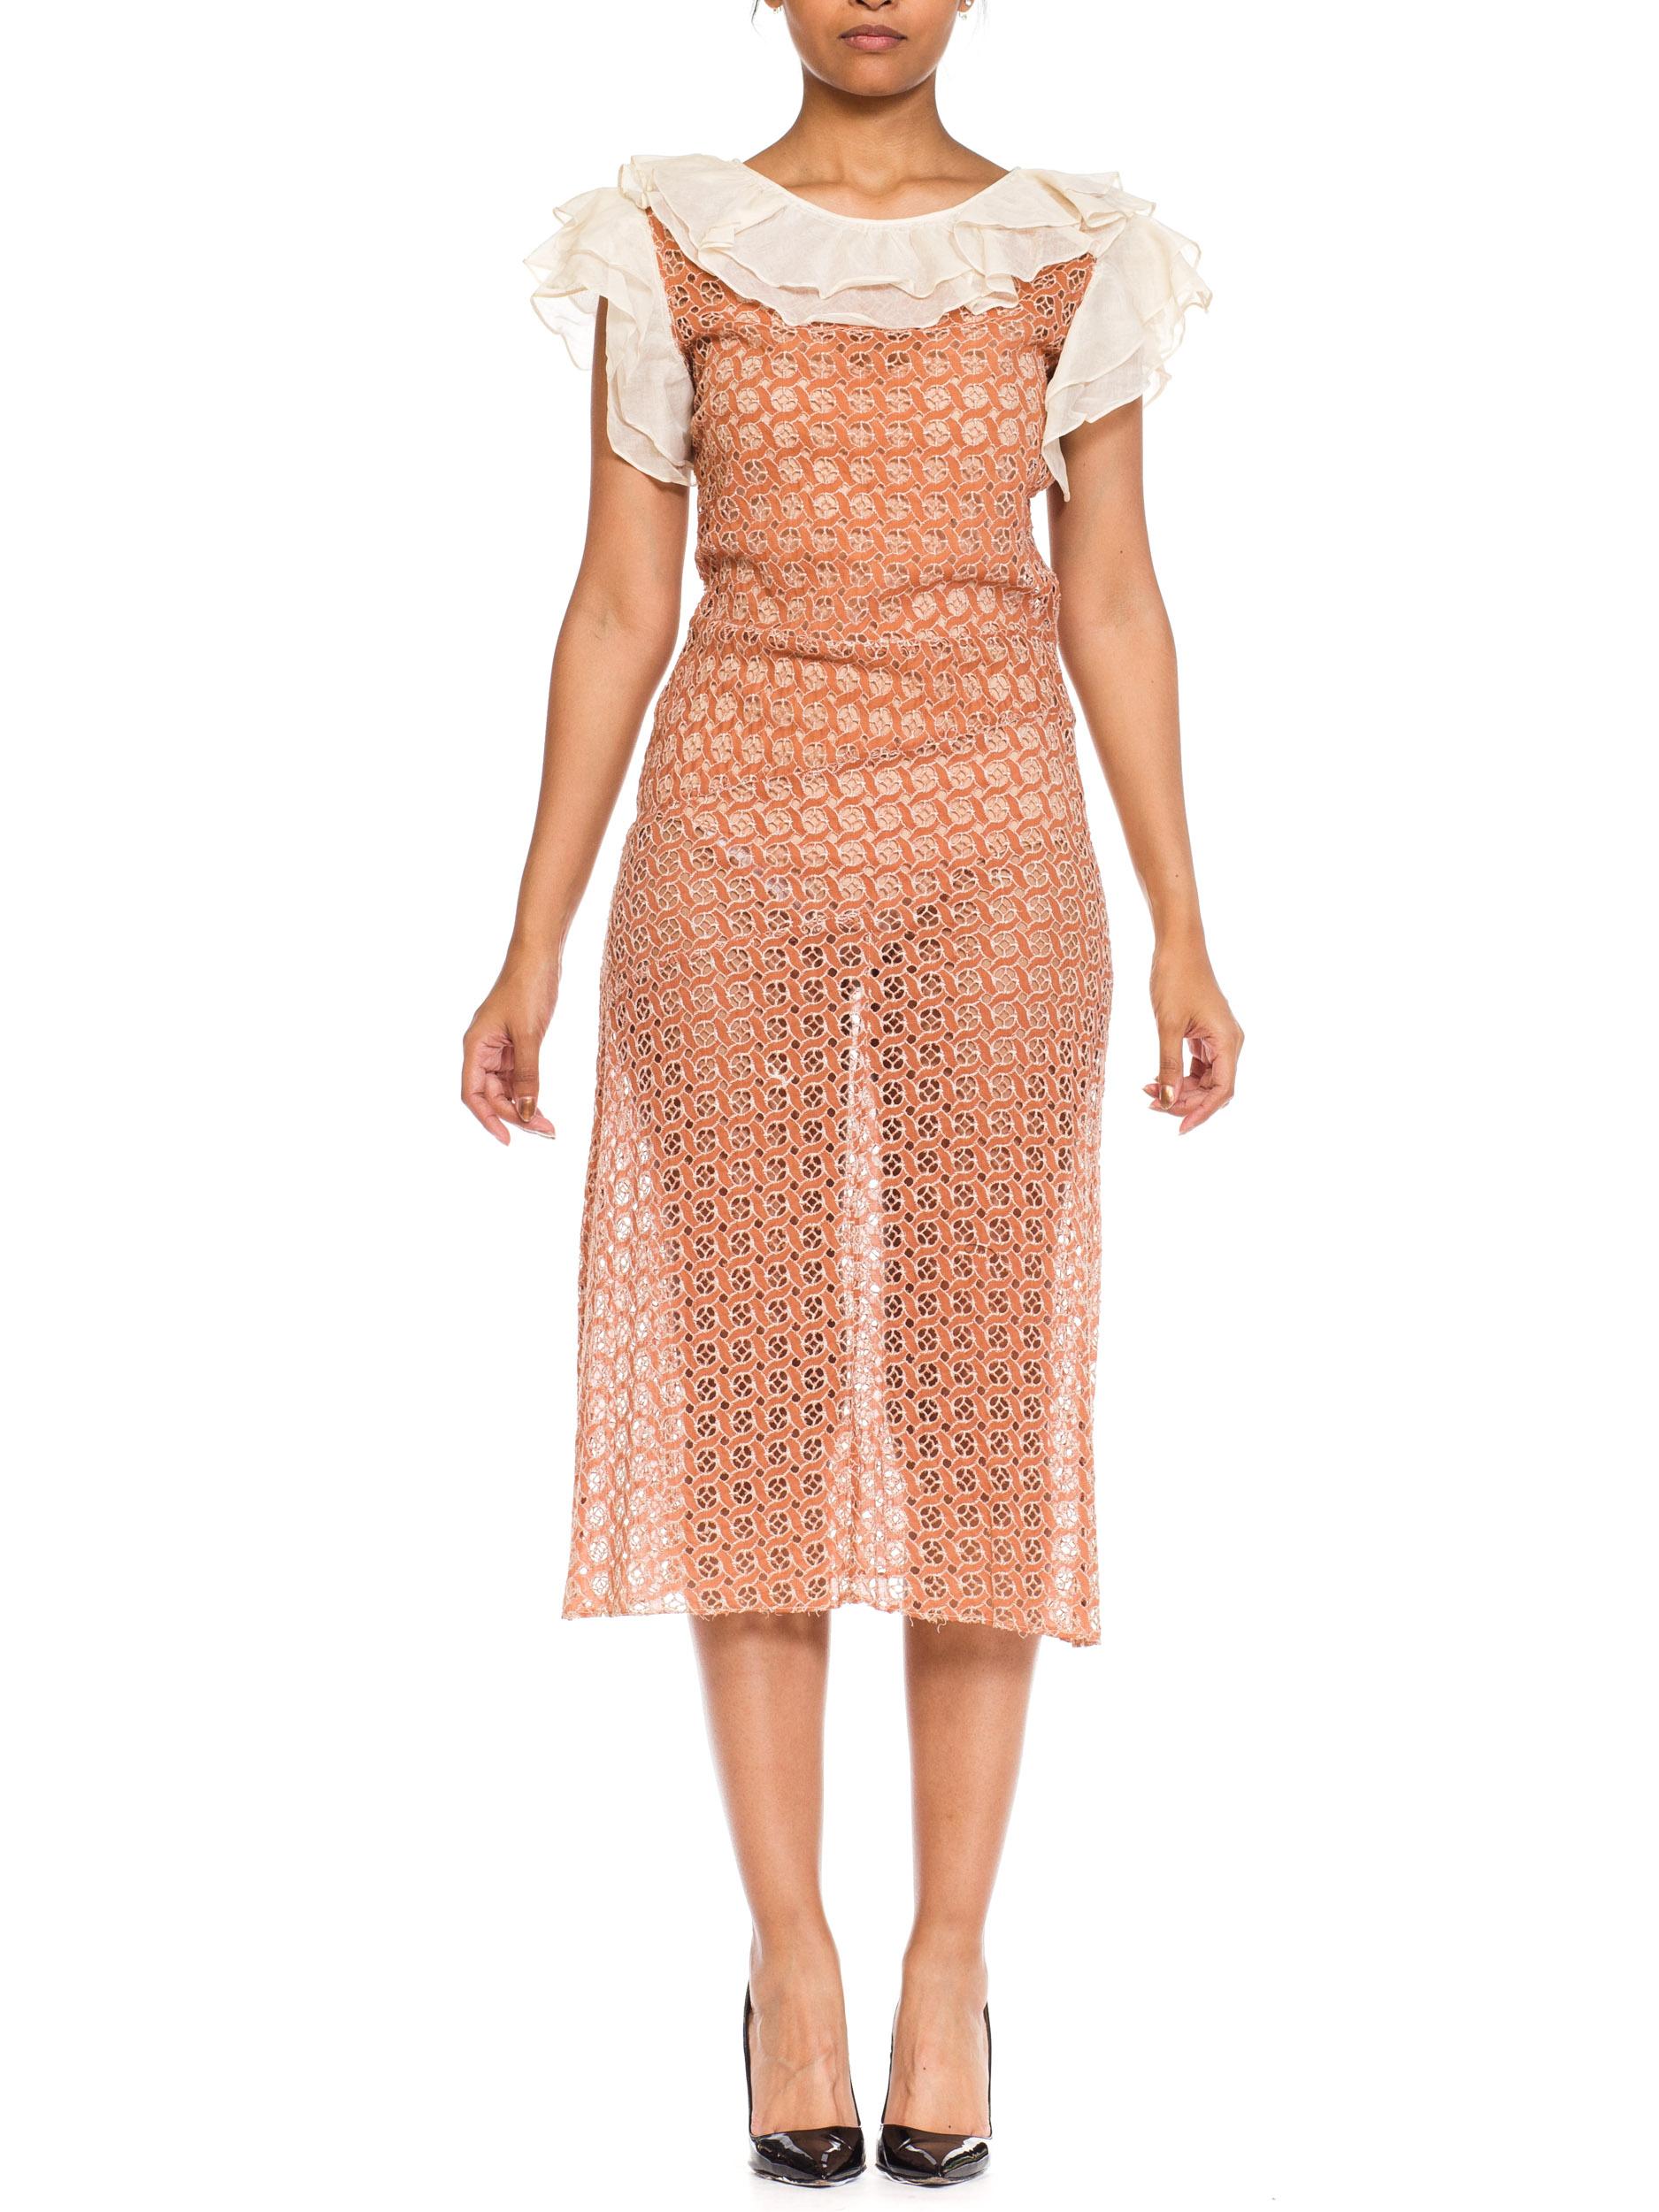 1930s cotton dress